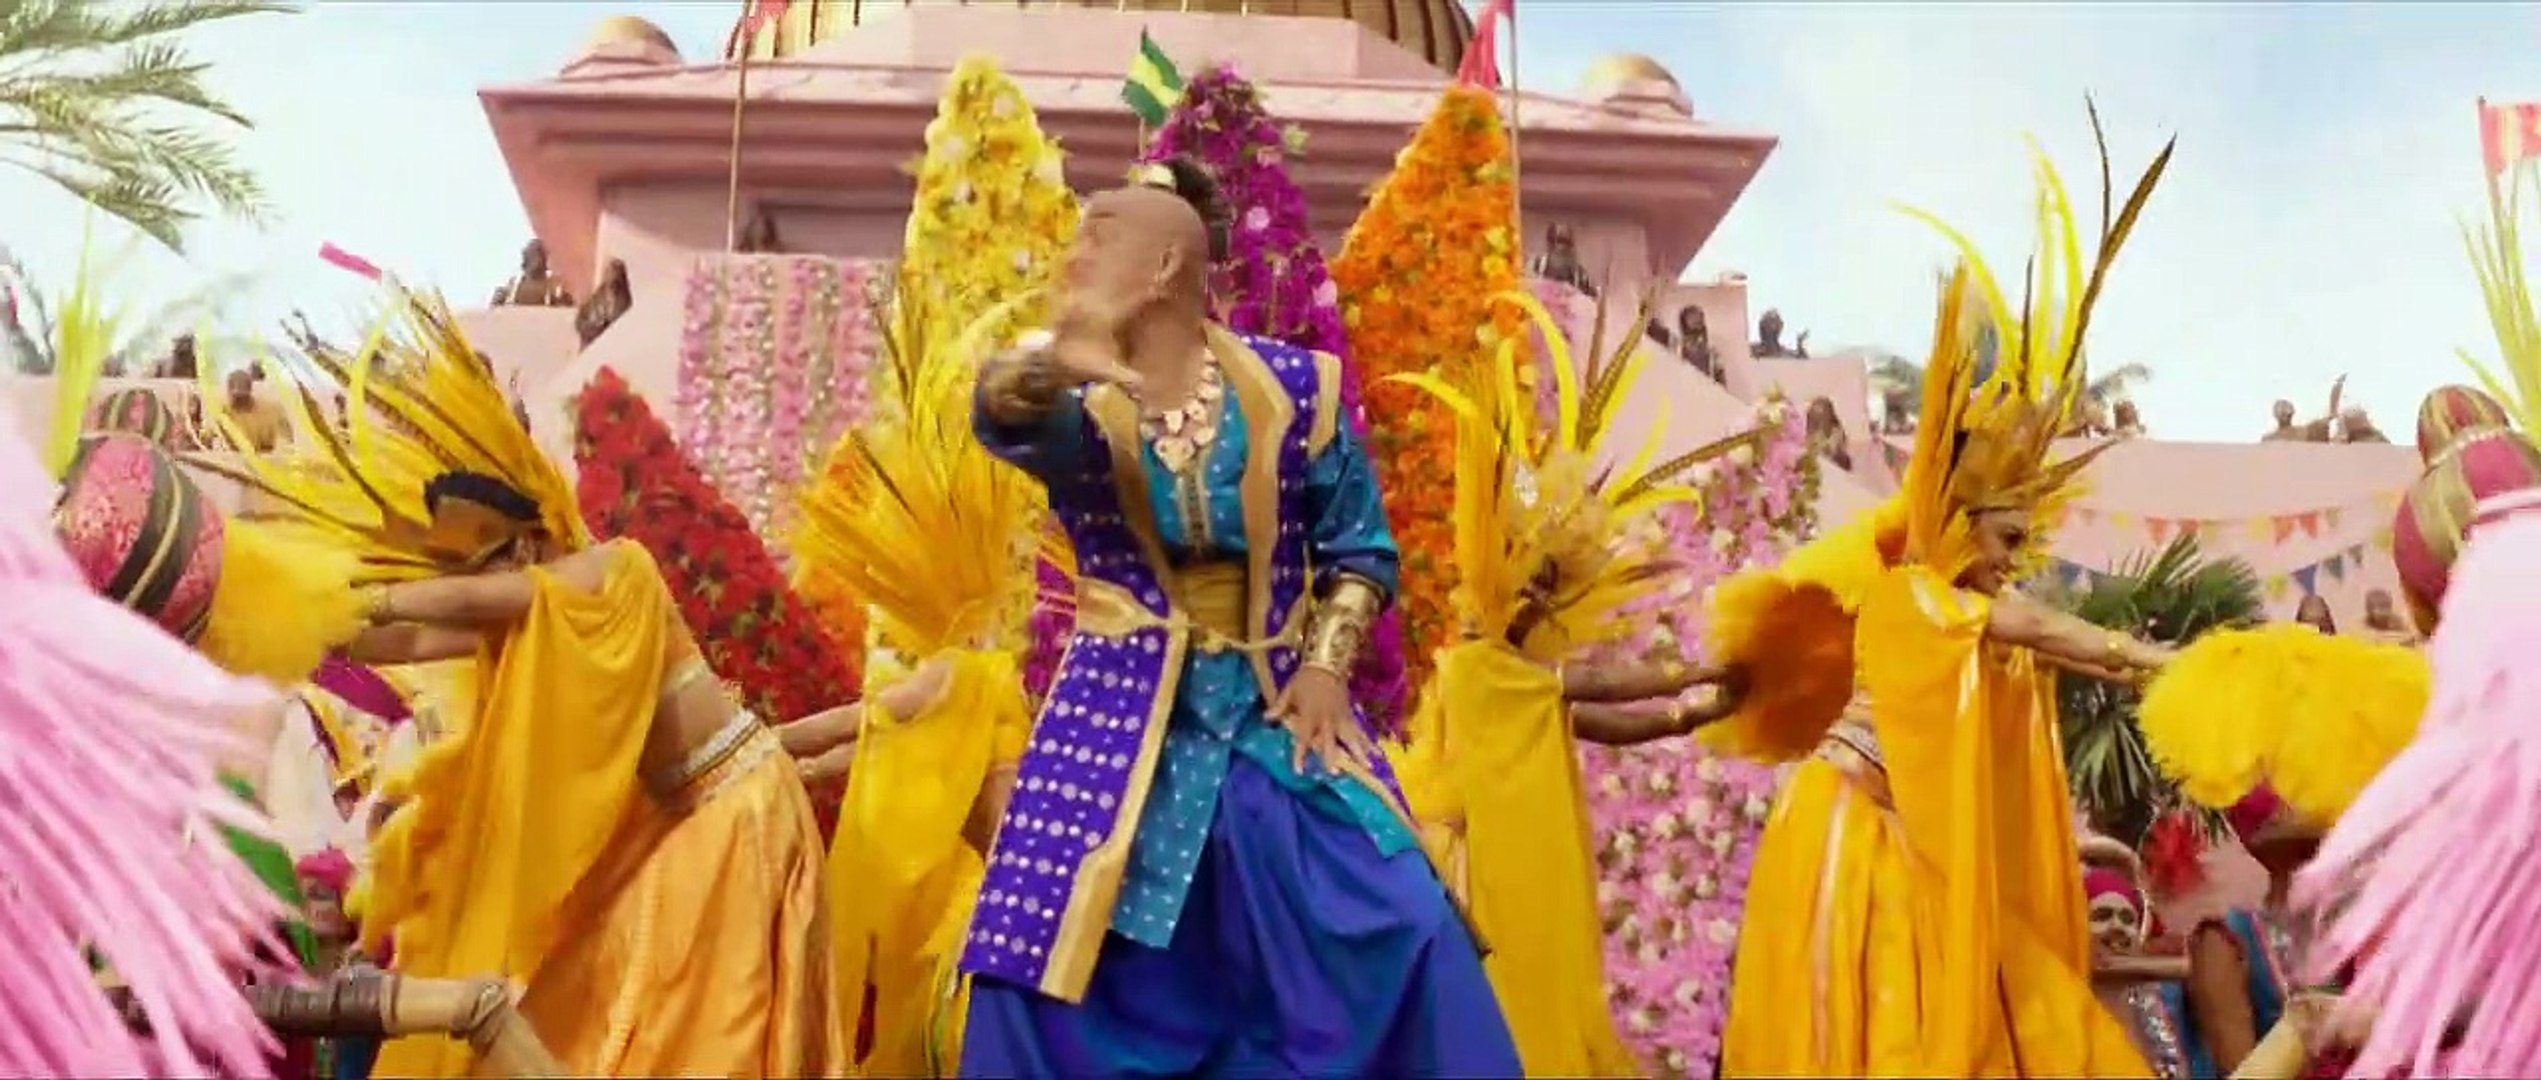 Extrait du film Aladdin (2019) - Will Smith qui chante Prince Ali - Vidéo  Dailymotion